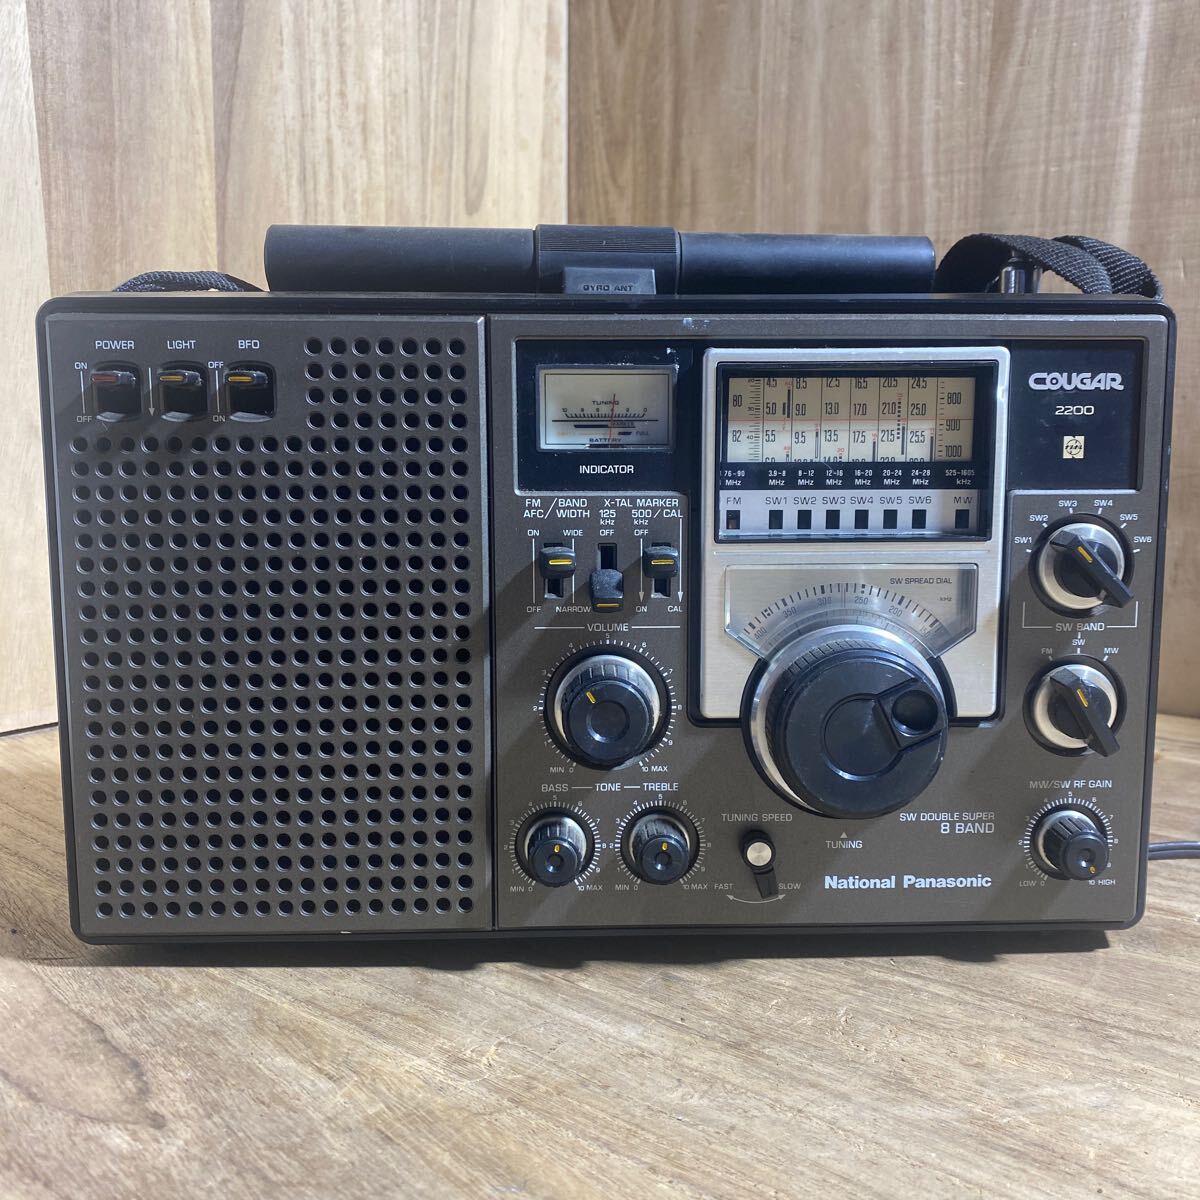 National Panasonic COUGAR radio Showa Retro RF-2200 control ②